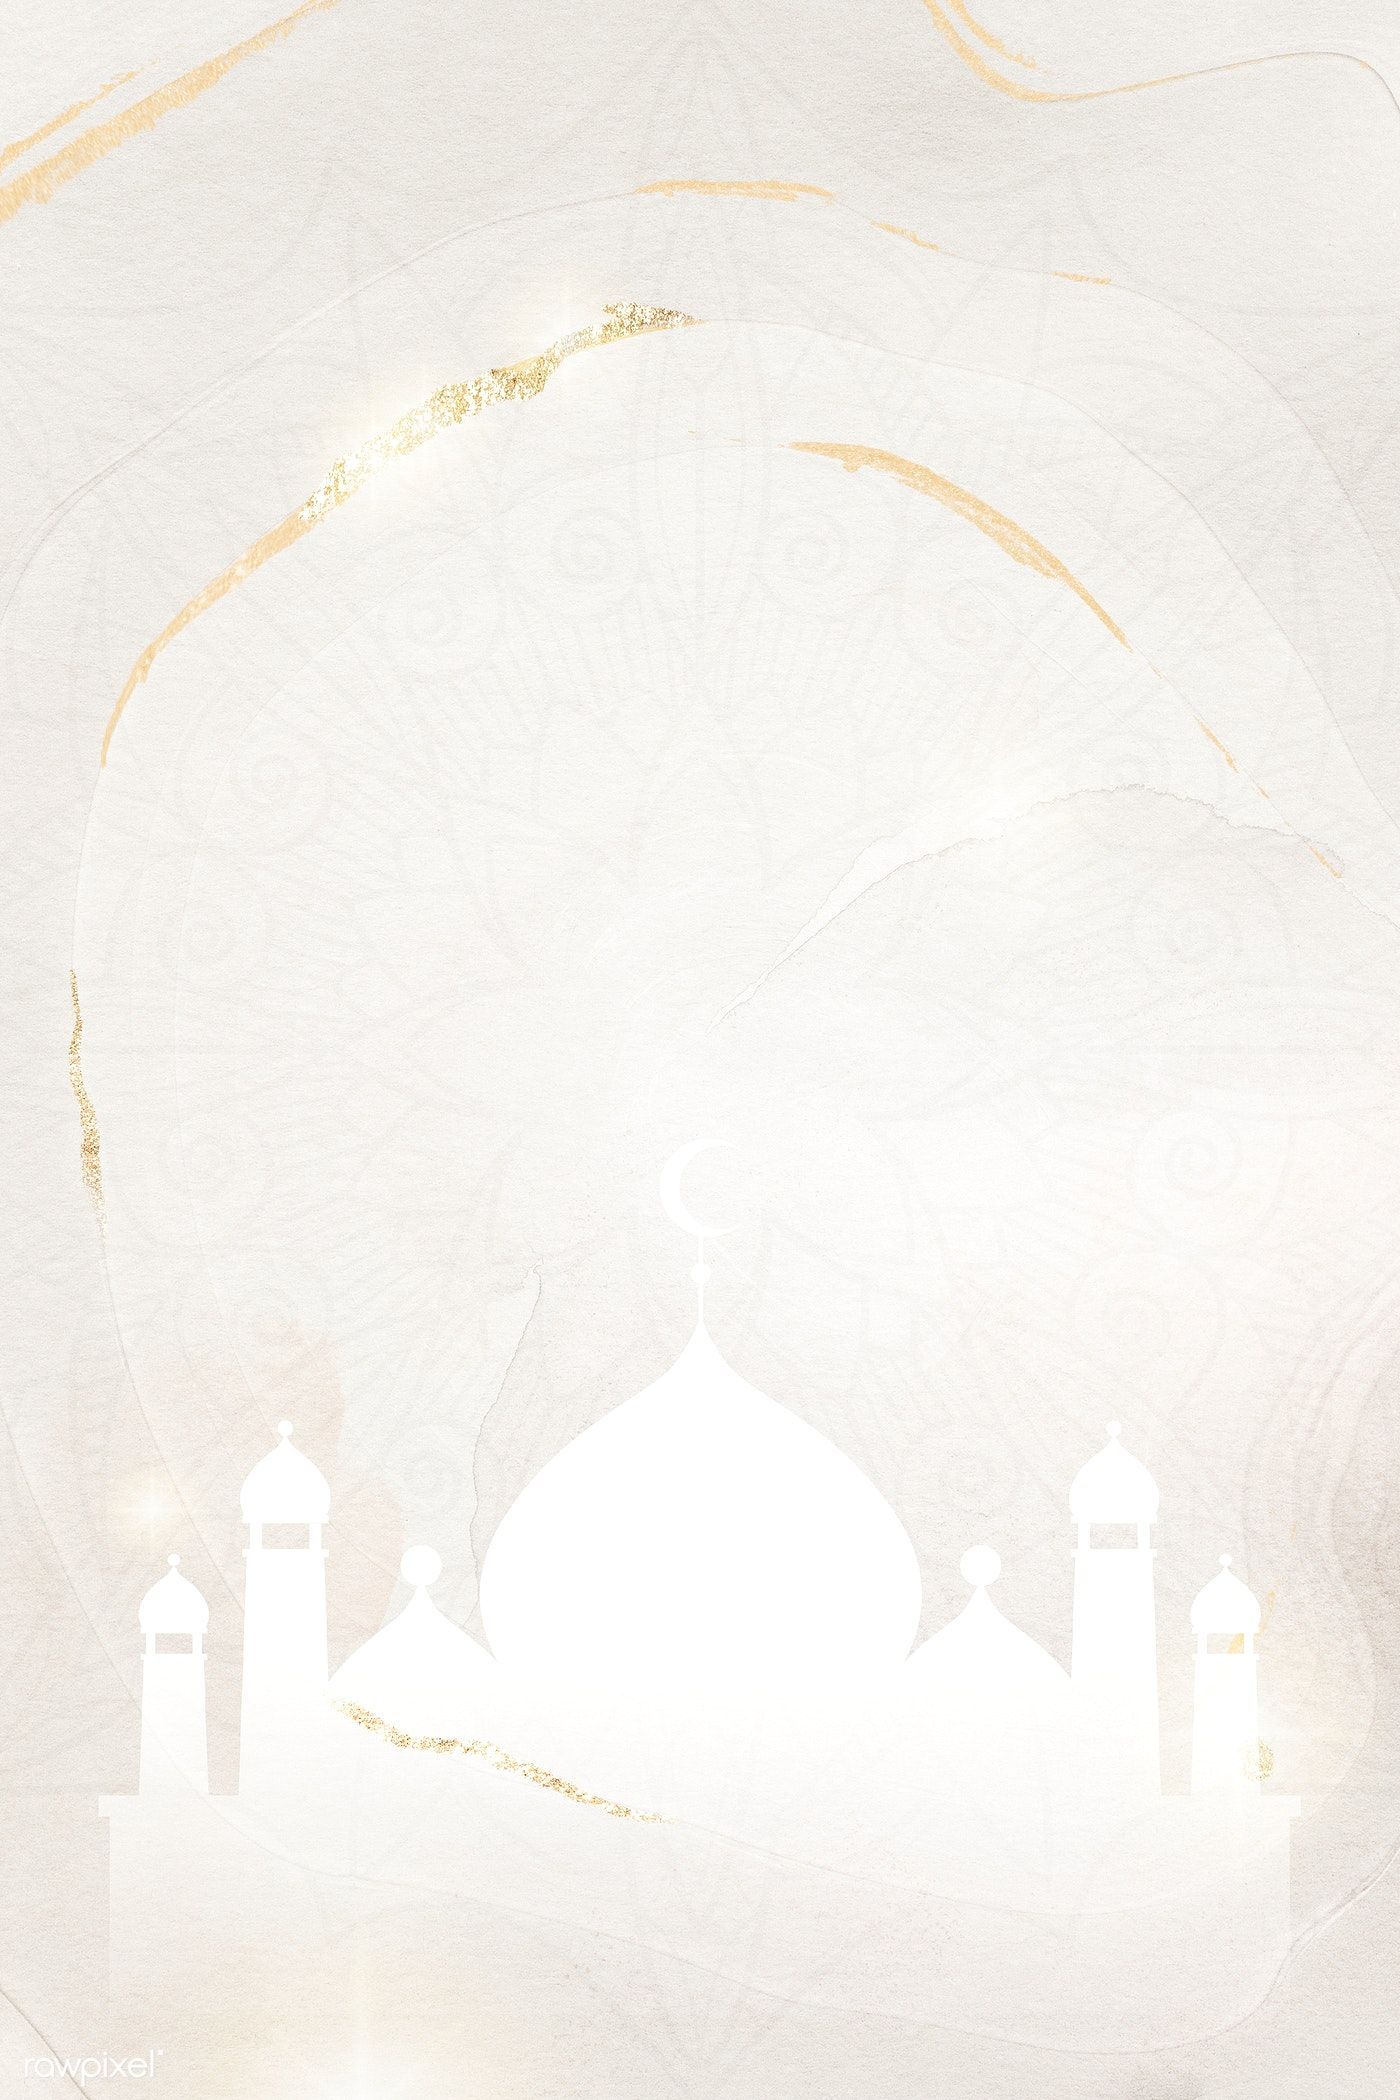 Golden glittery Eid Mubarak border. free image